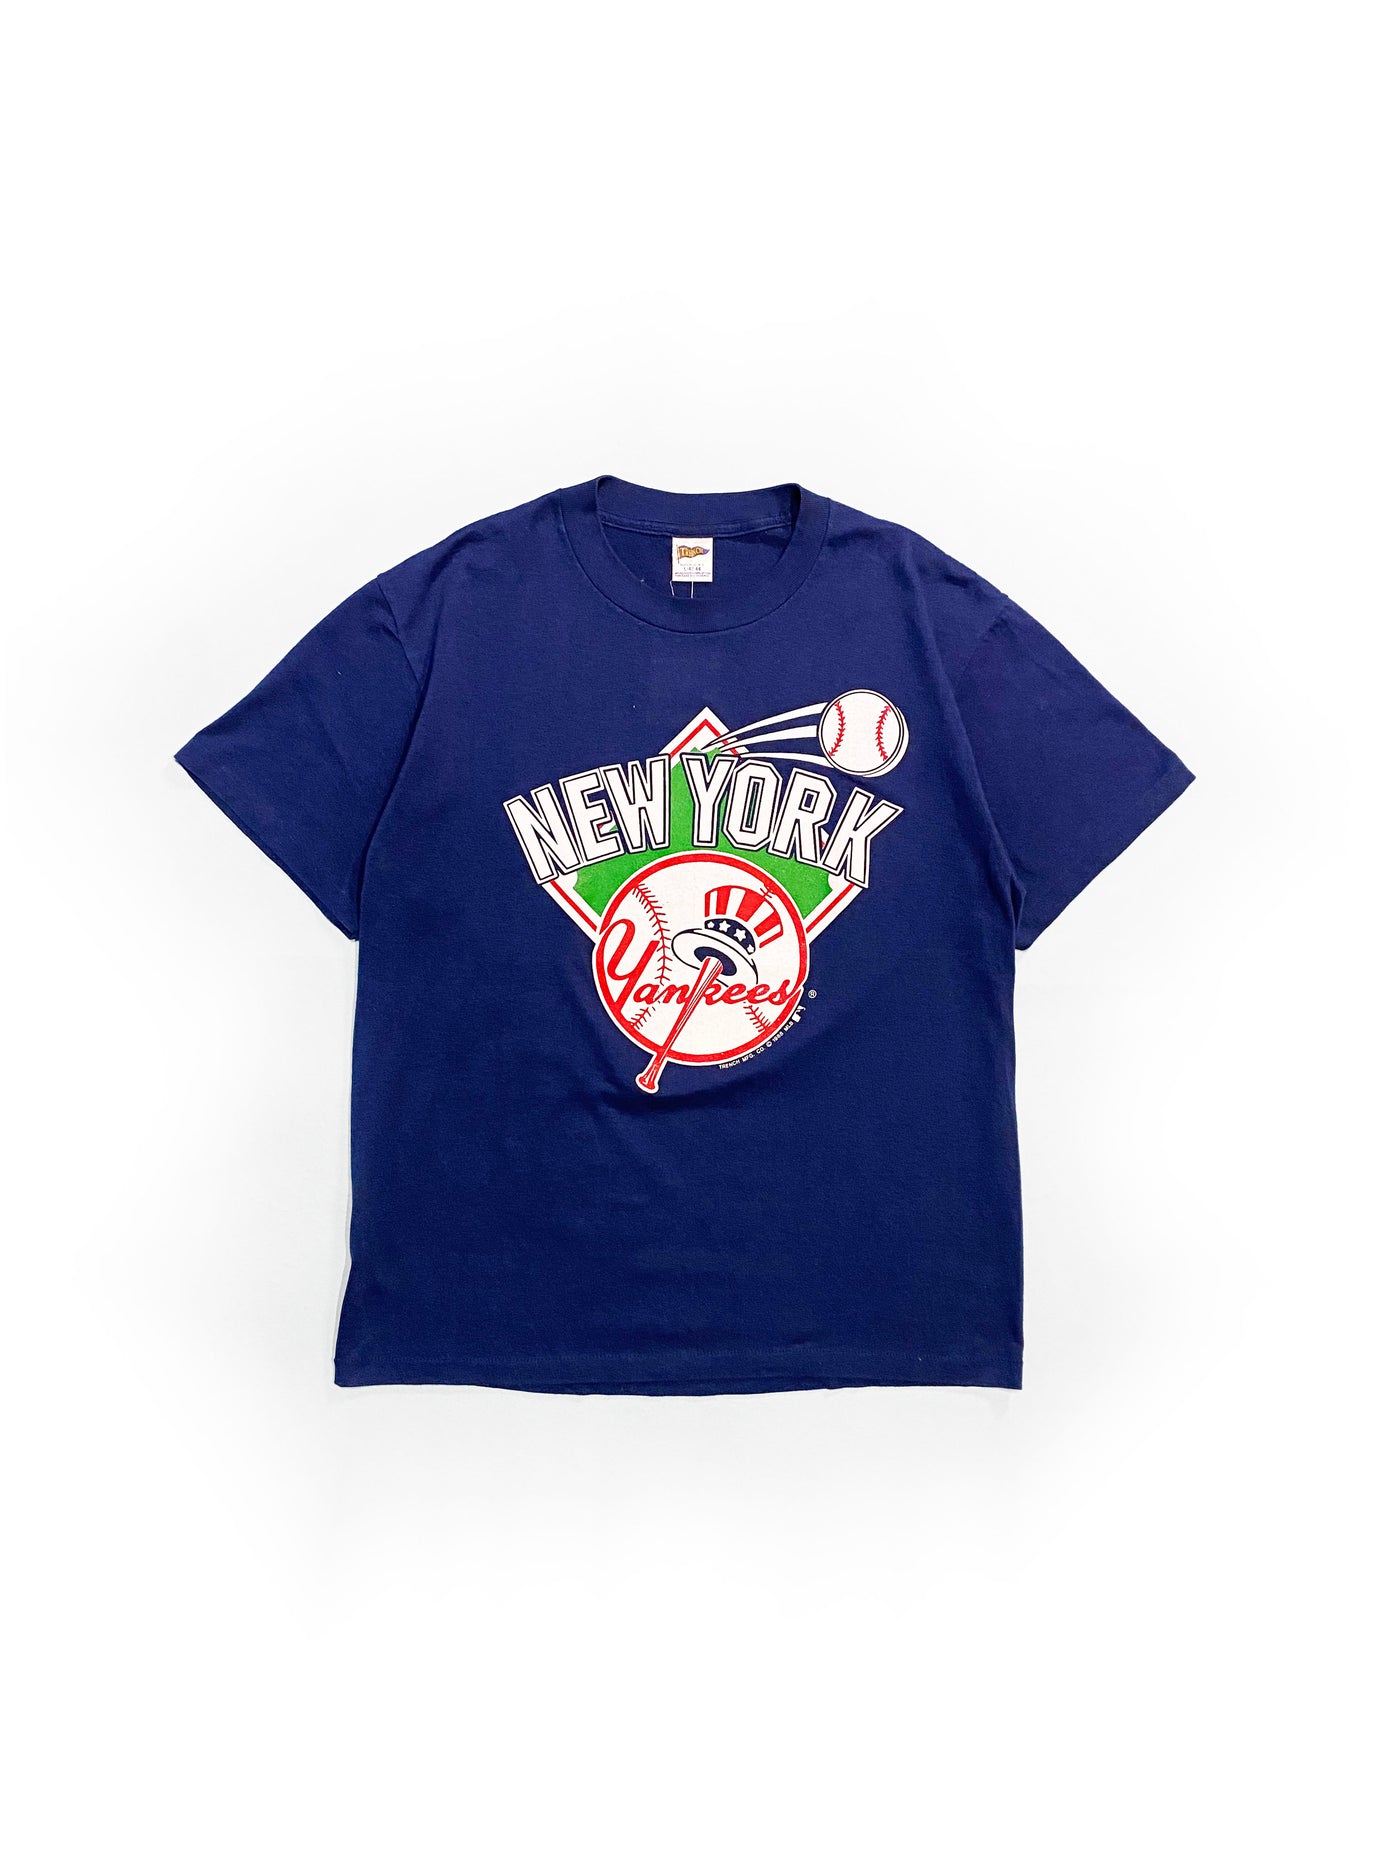 Vintage 1988 New York Yankees T-Shirt